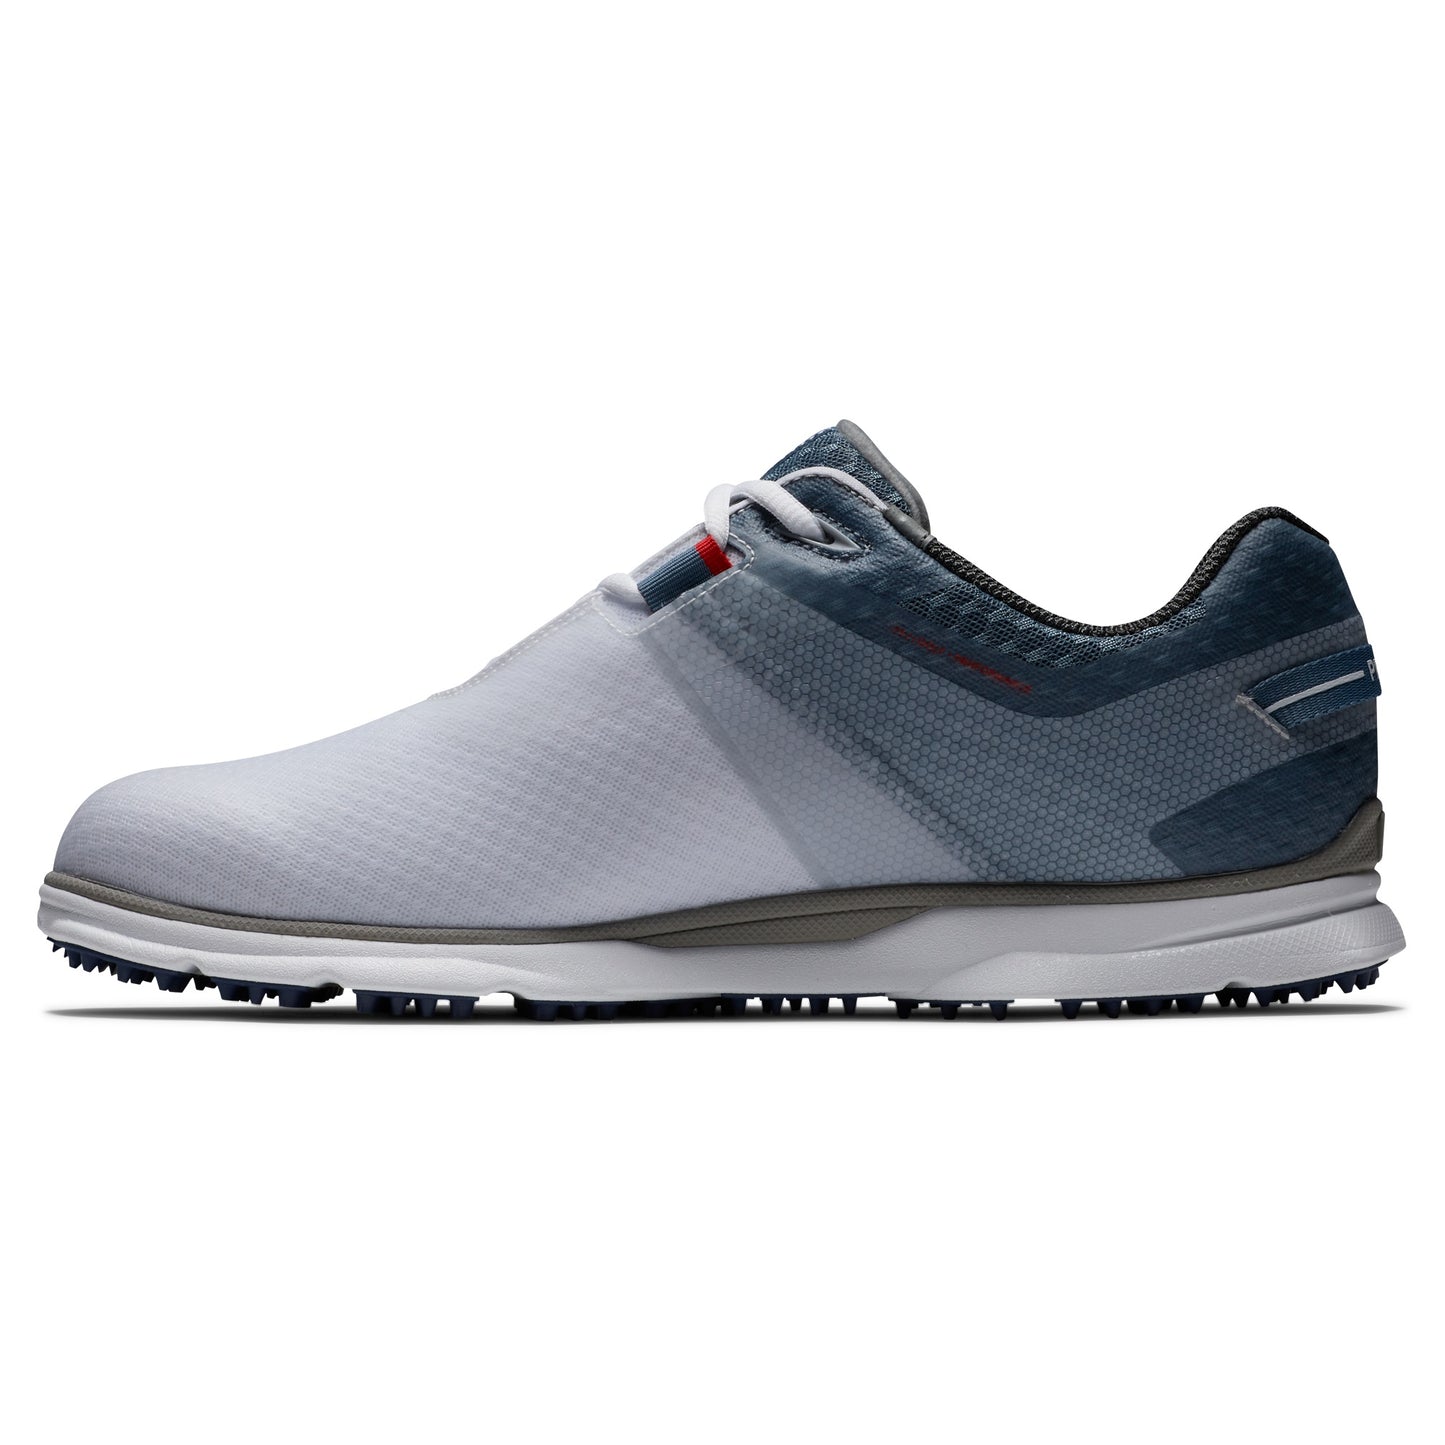 FootJoy Pro|SL Sport Golf Shoes 53854 White/Blue Fog (Previous Season Style)